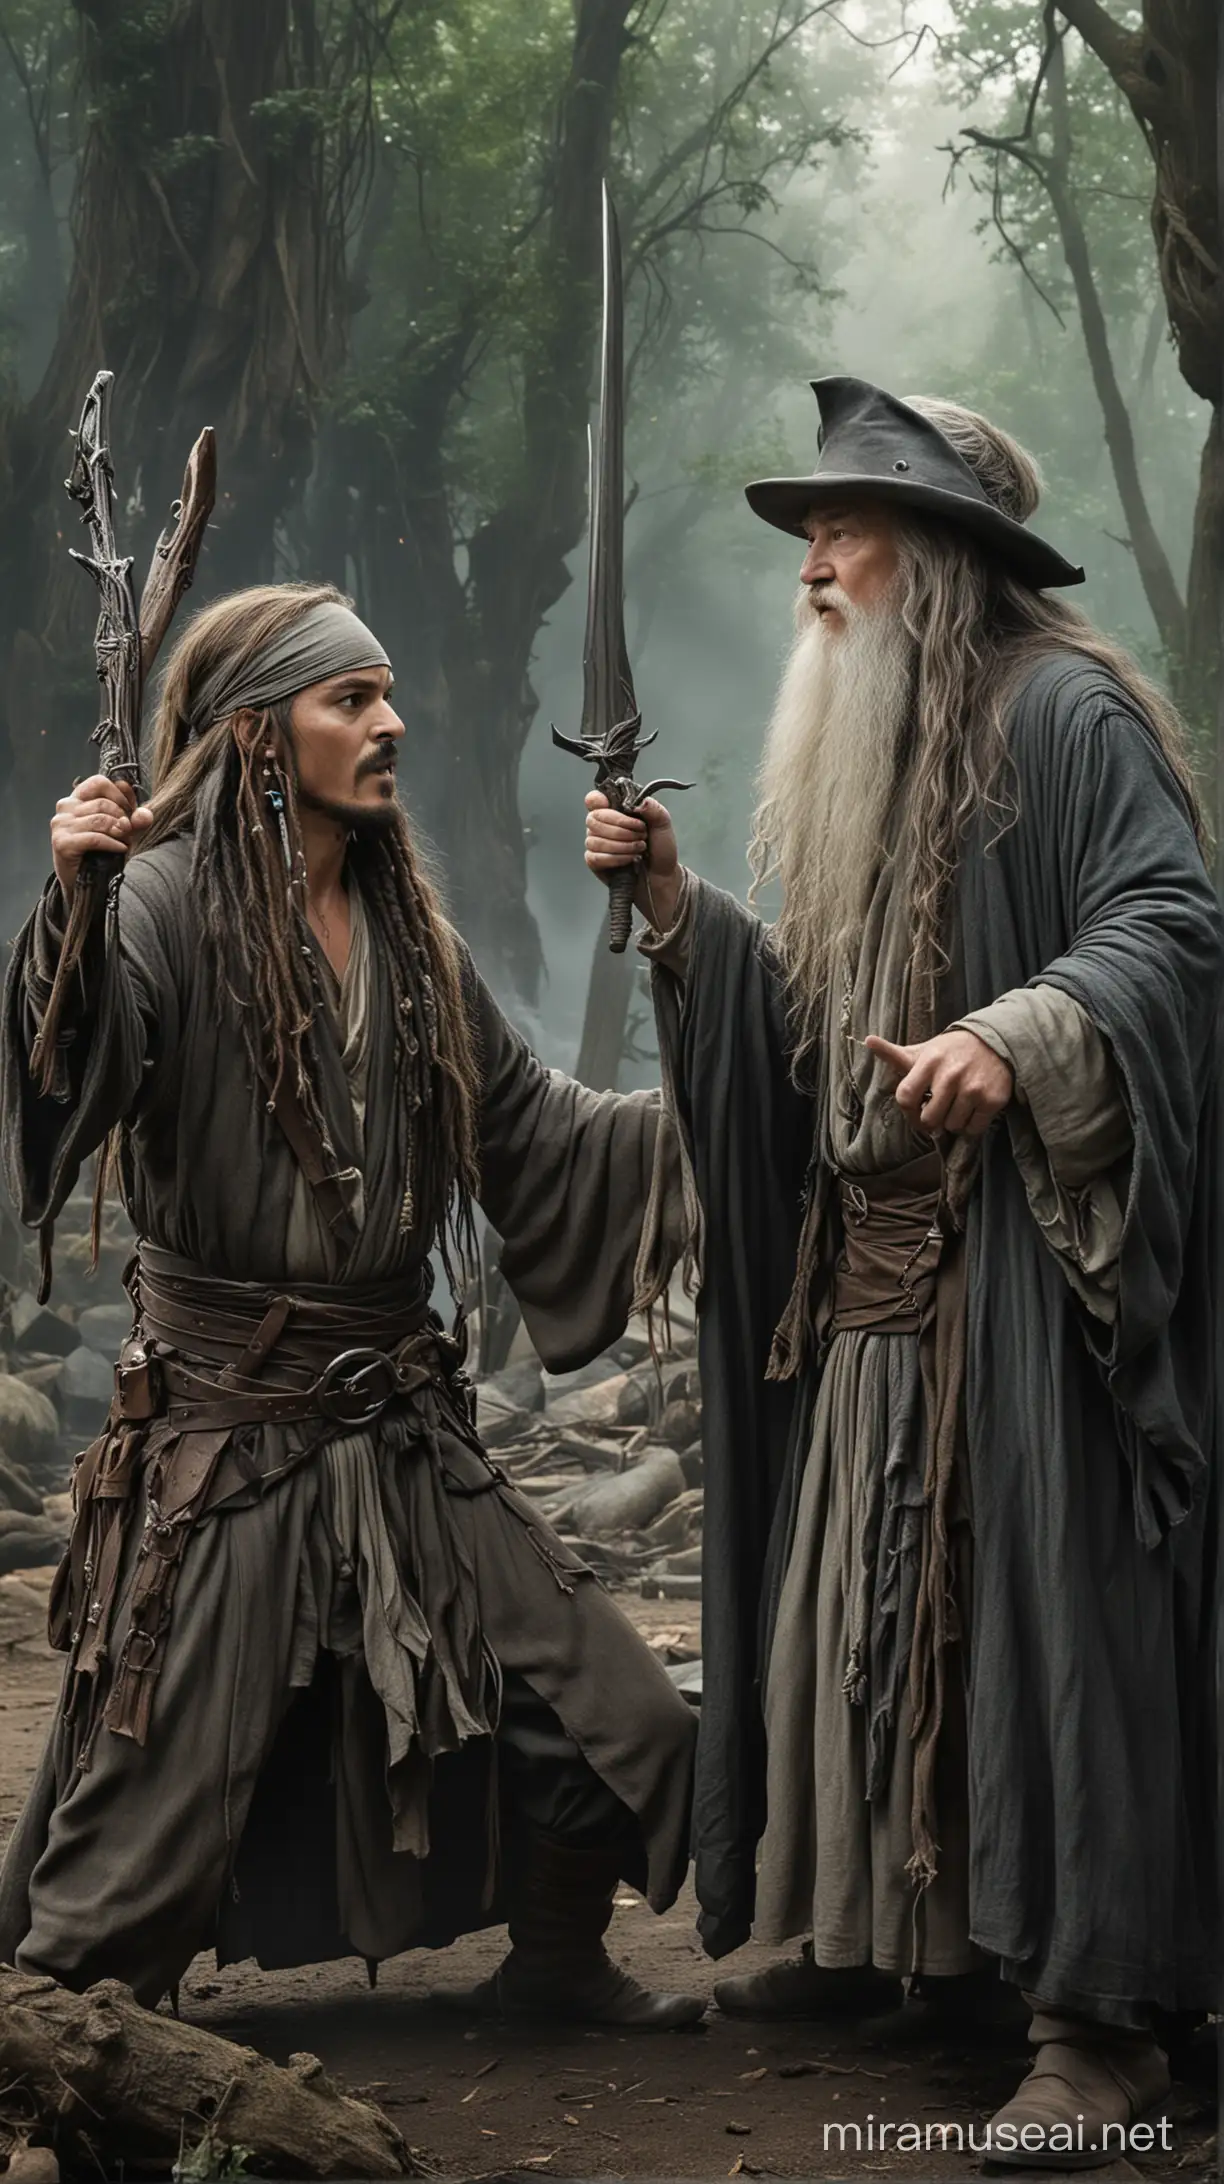 Jack Sparrow and Gandalf, fighting Saruman  in Isengard